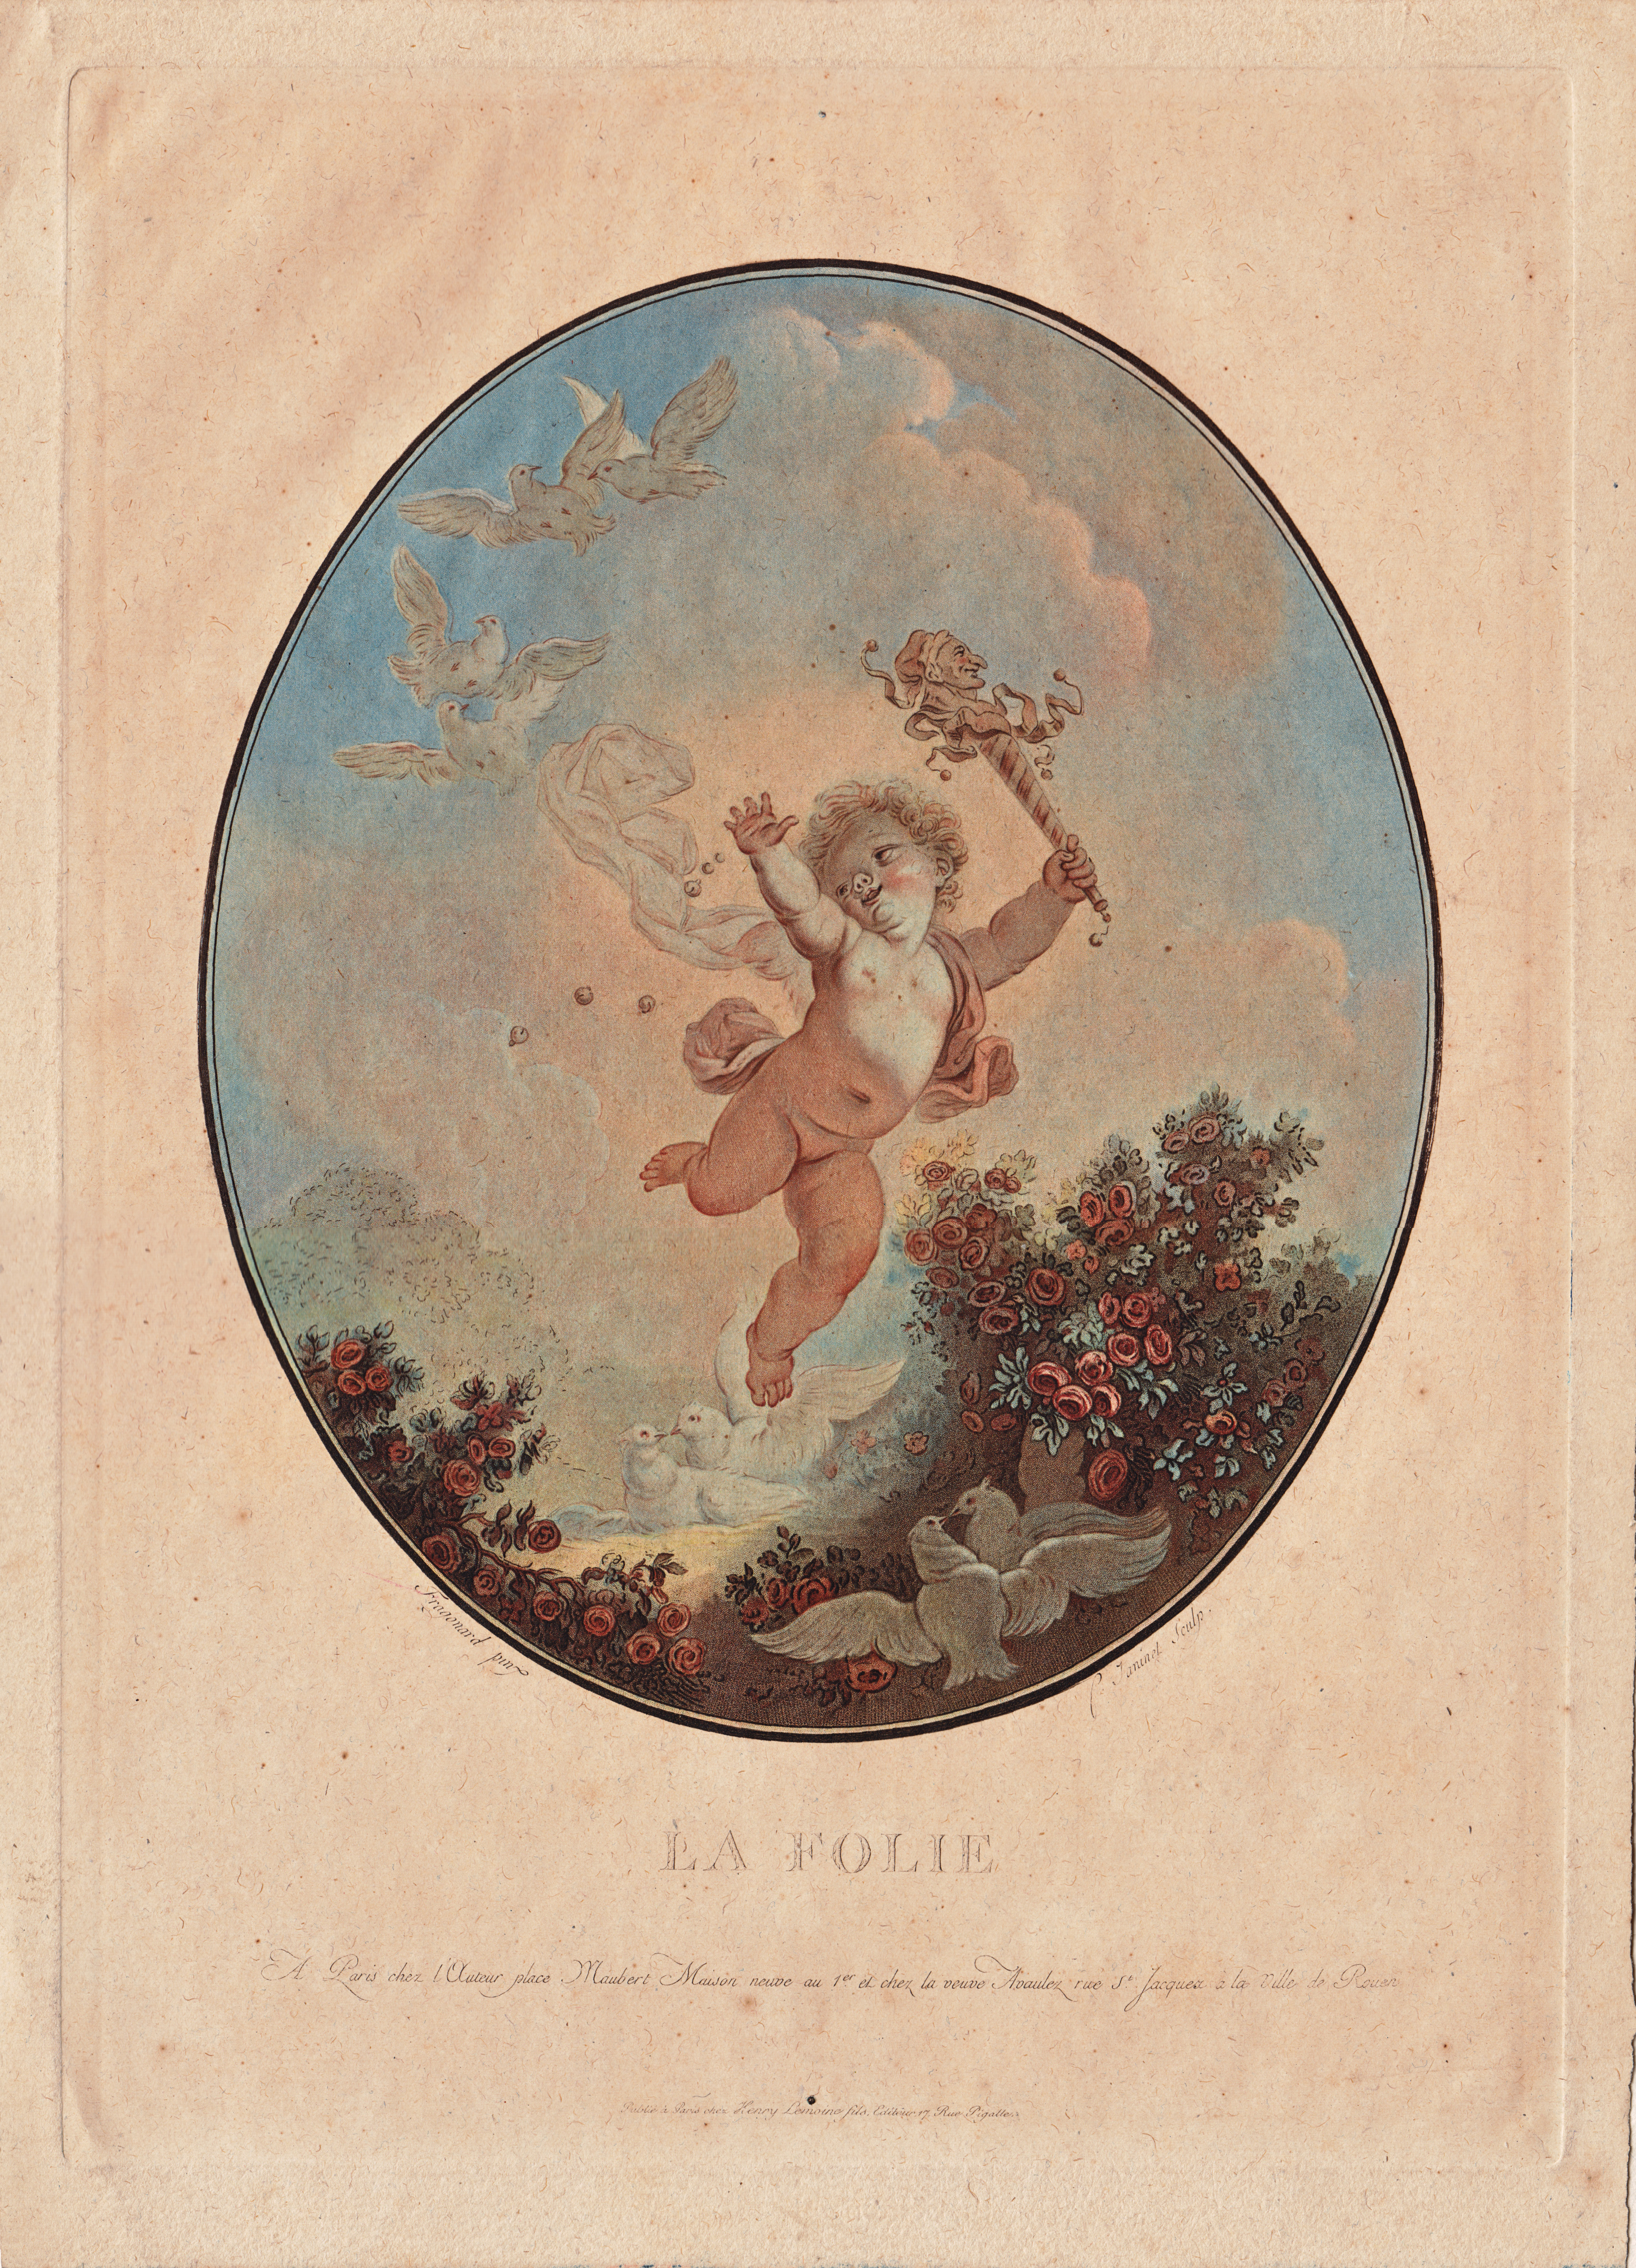 Jean-Franois Janinet, La Folie, engraving with aquatint, 1777